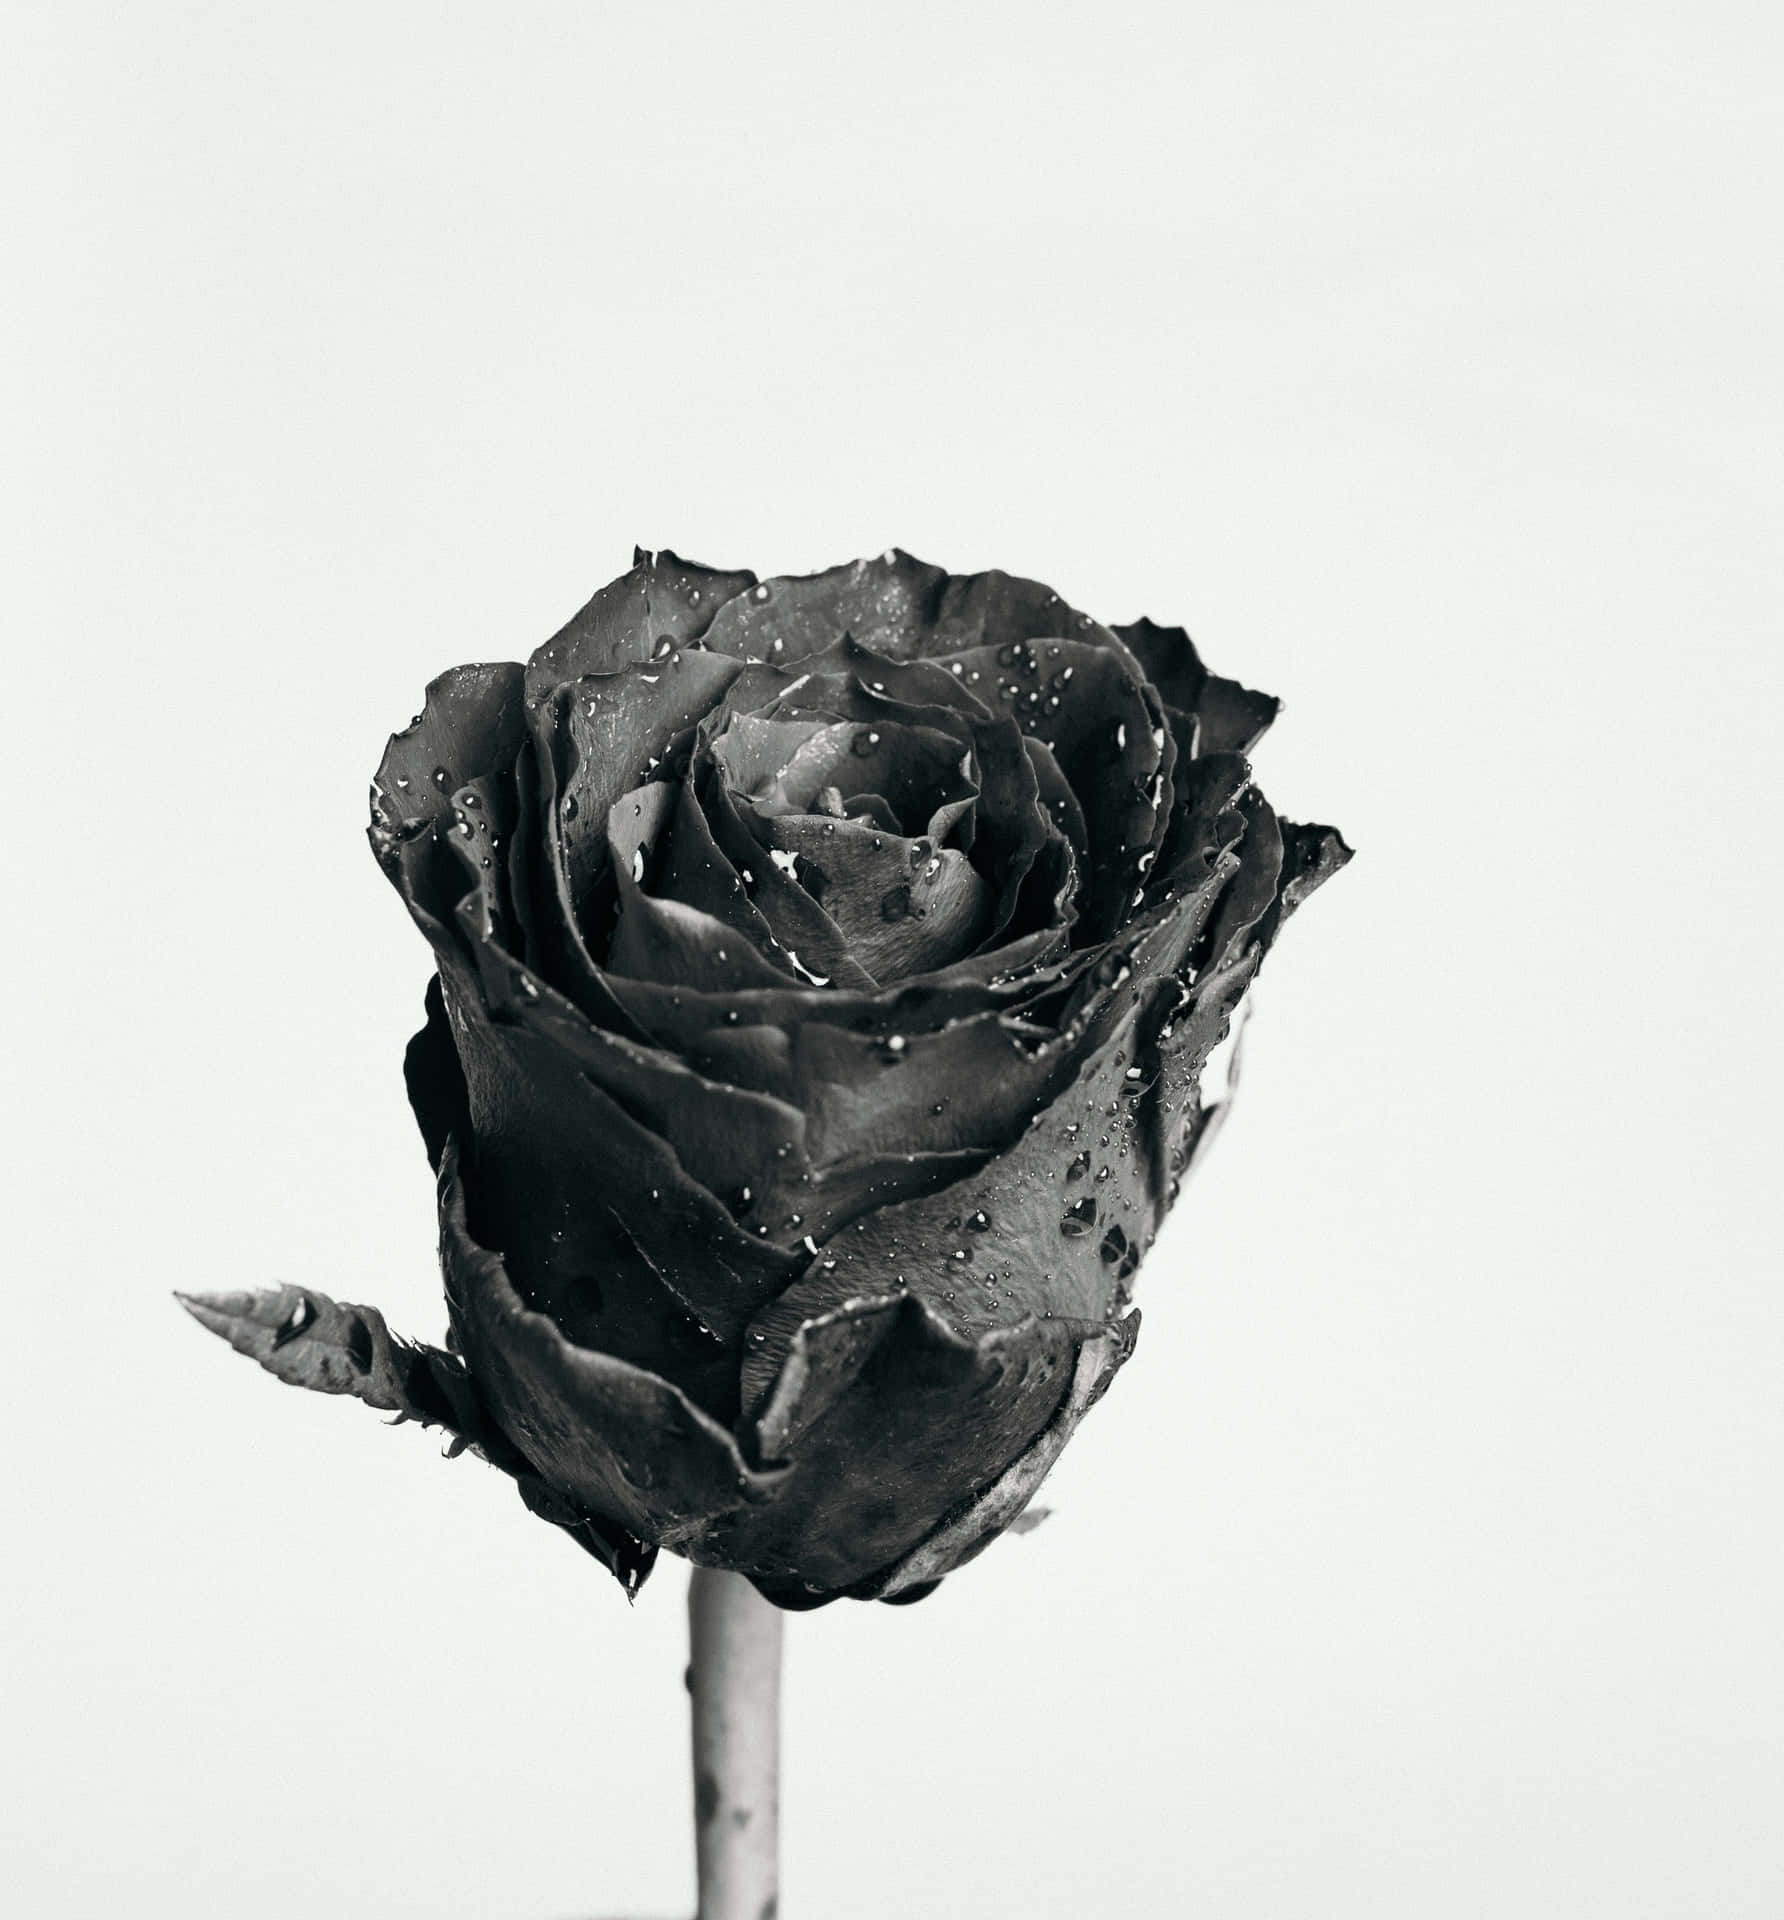 Majestic Beauty Of A Black Rose